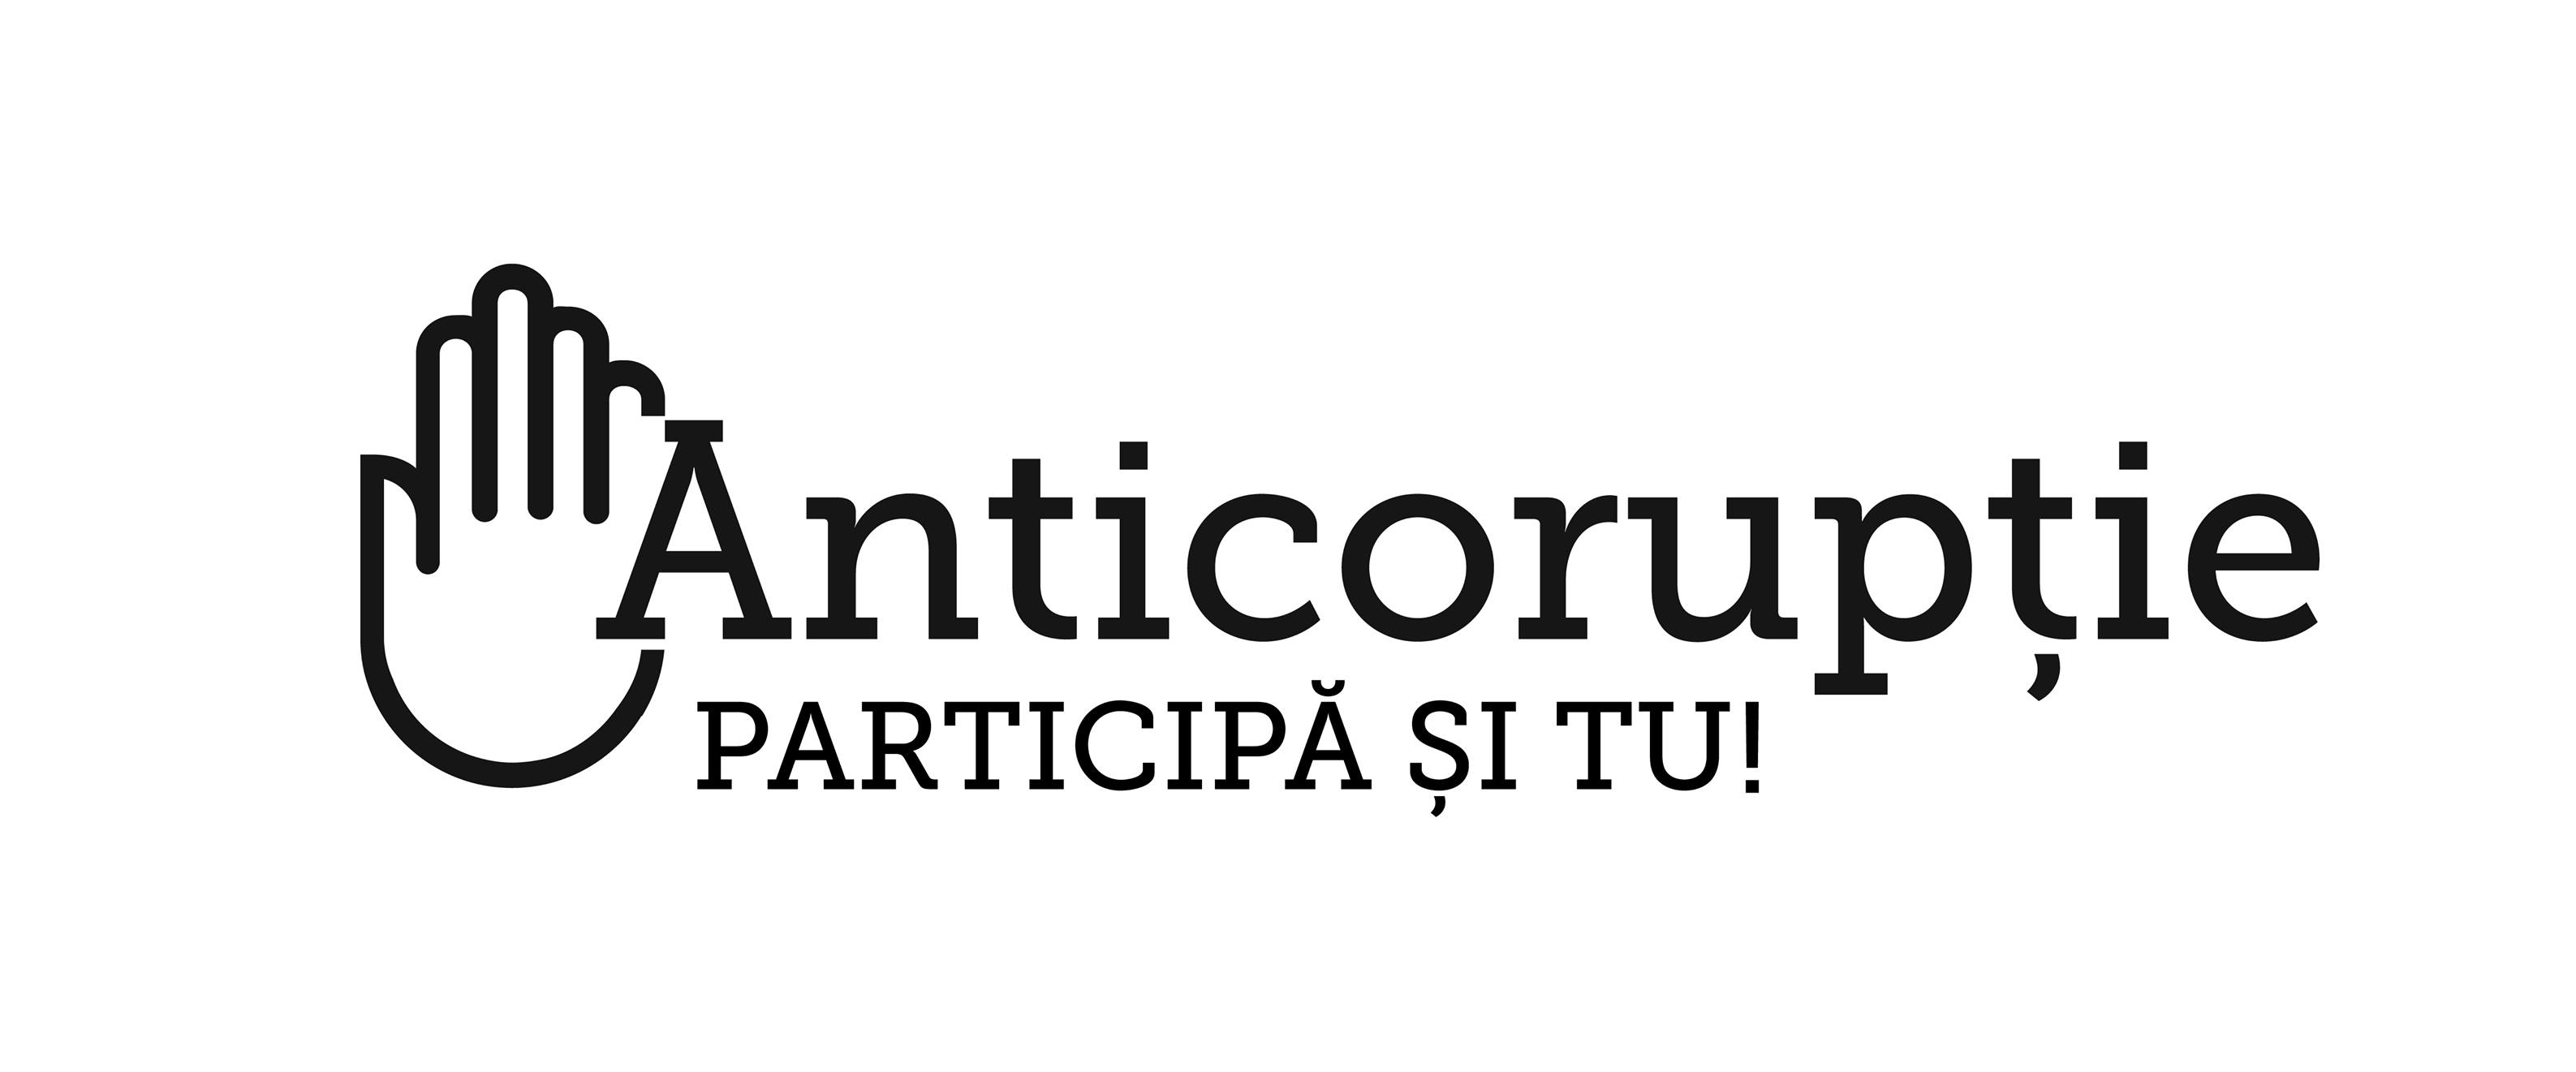 Anticoruptie.md